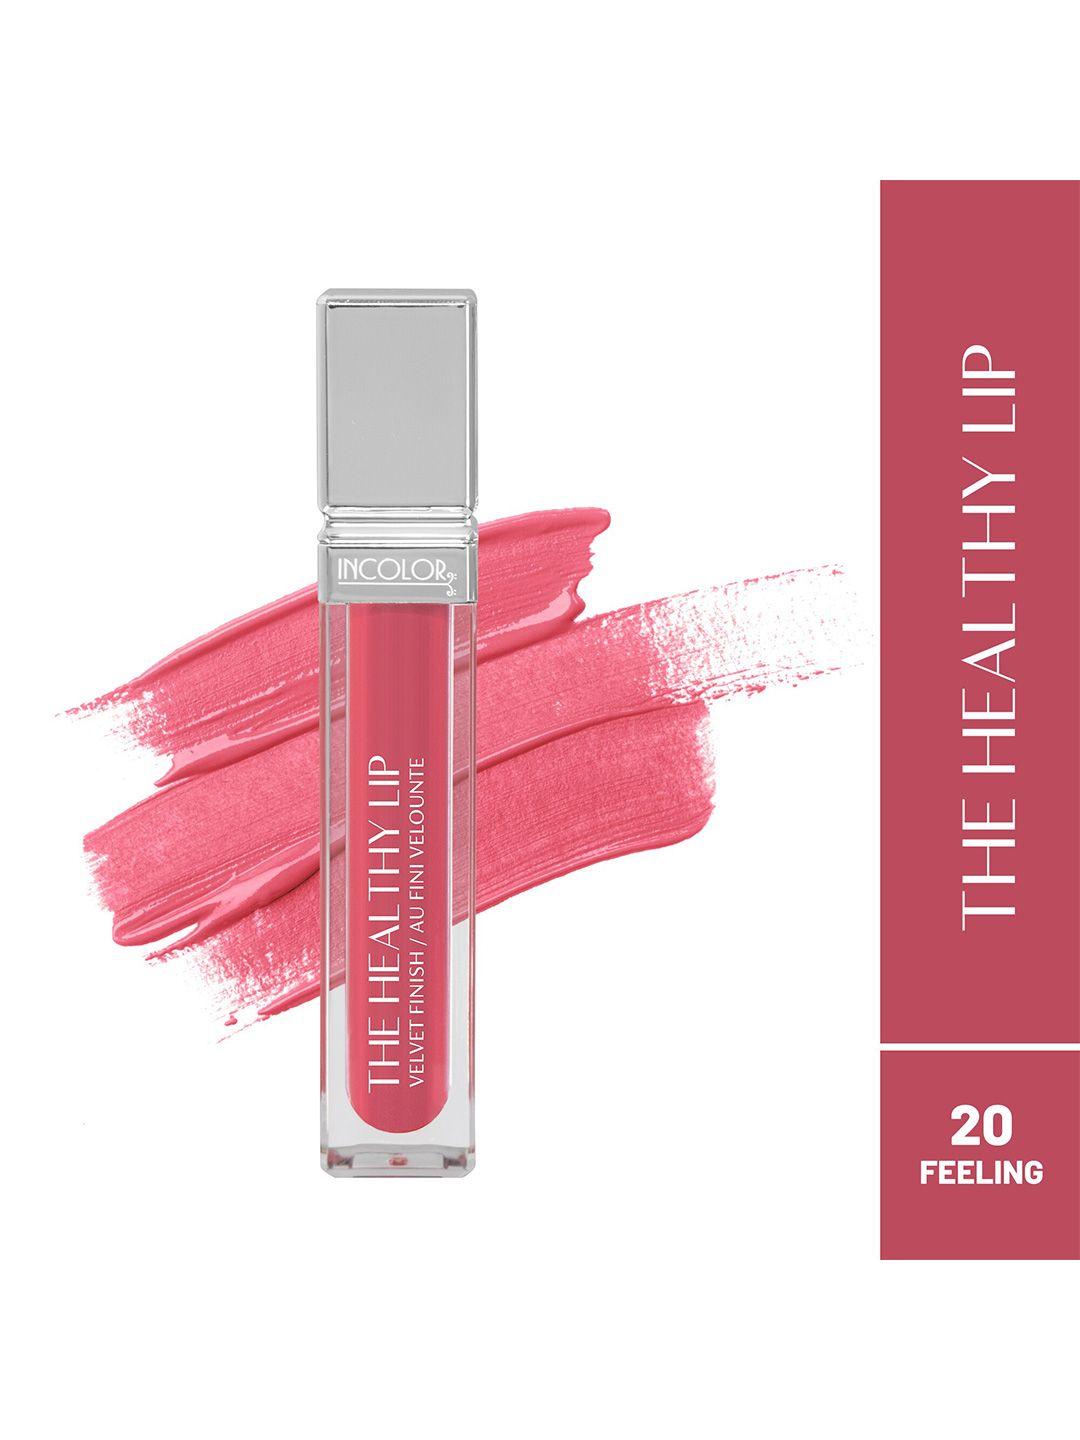 incolor the healthy lip liquid matte lip gloss - 8ml - feeling 20